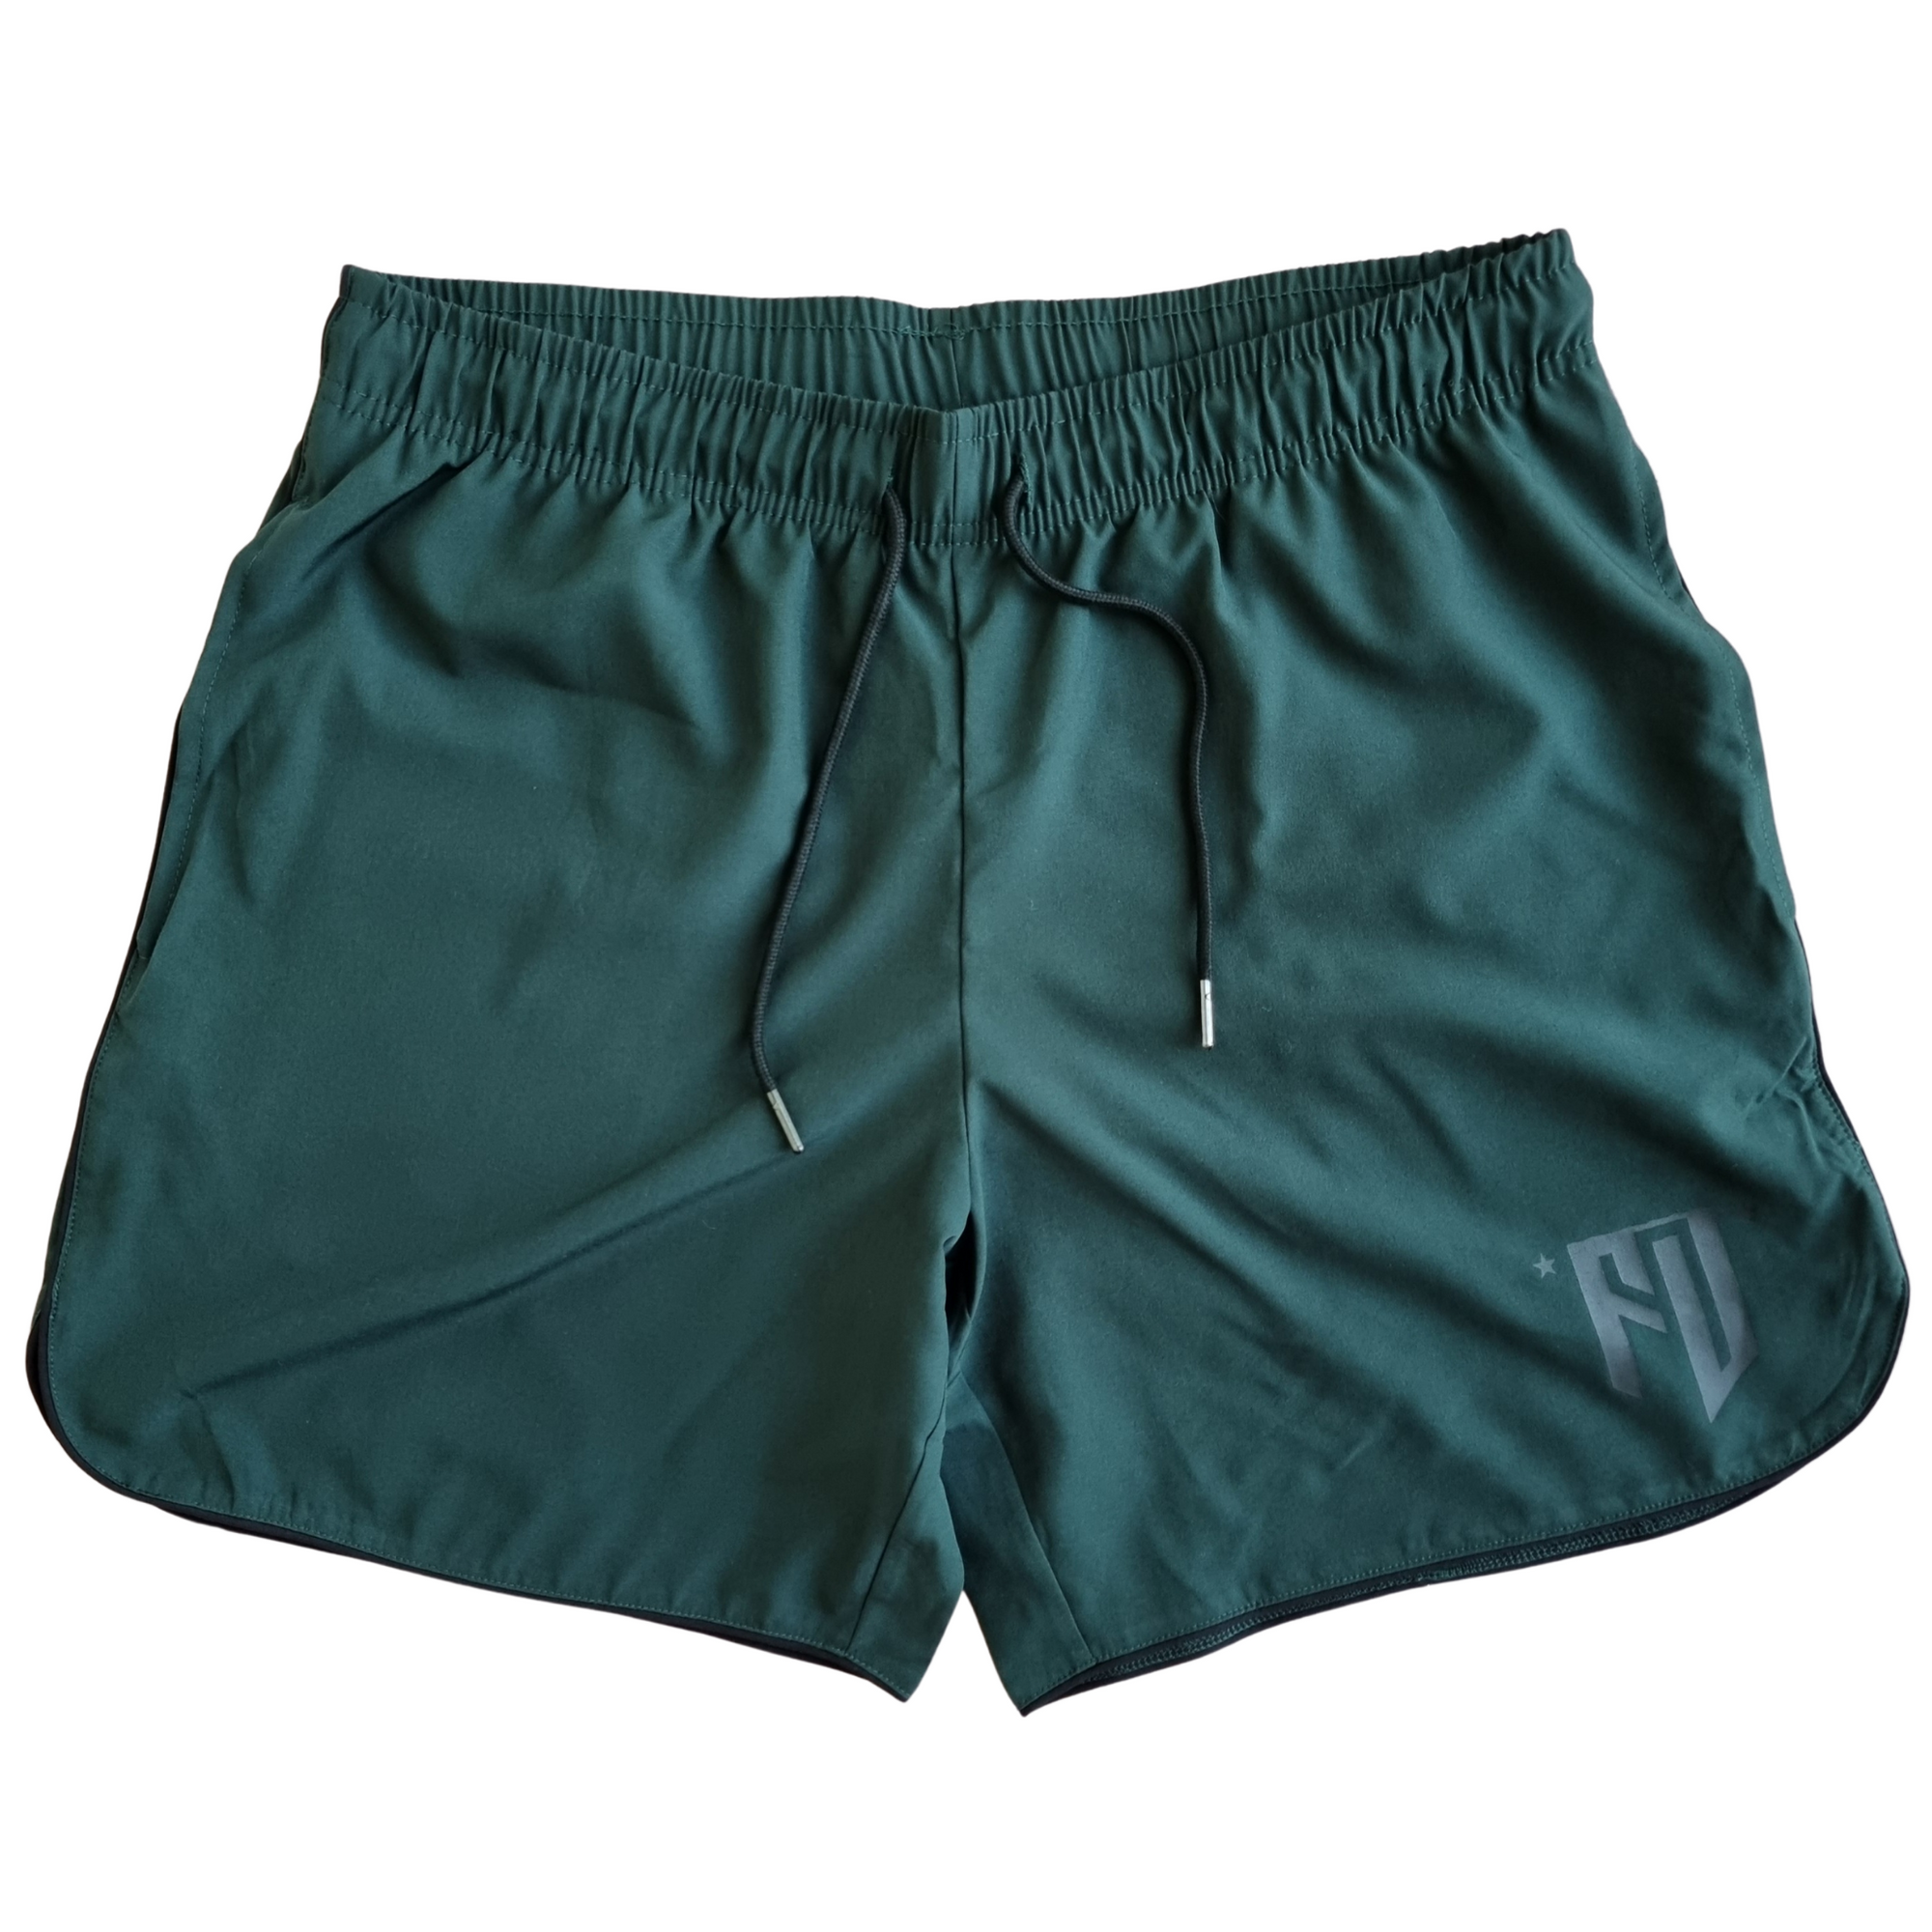 Athletic Training Shorts - Green/Black